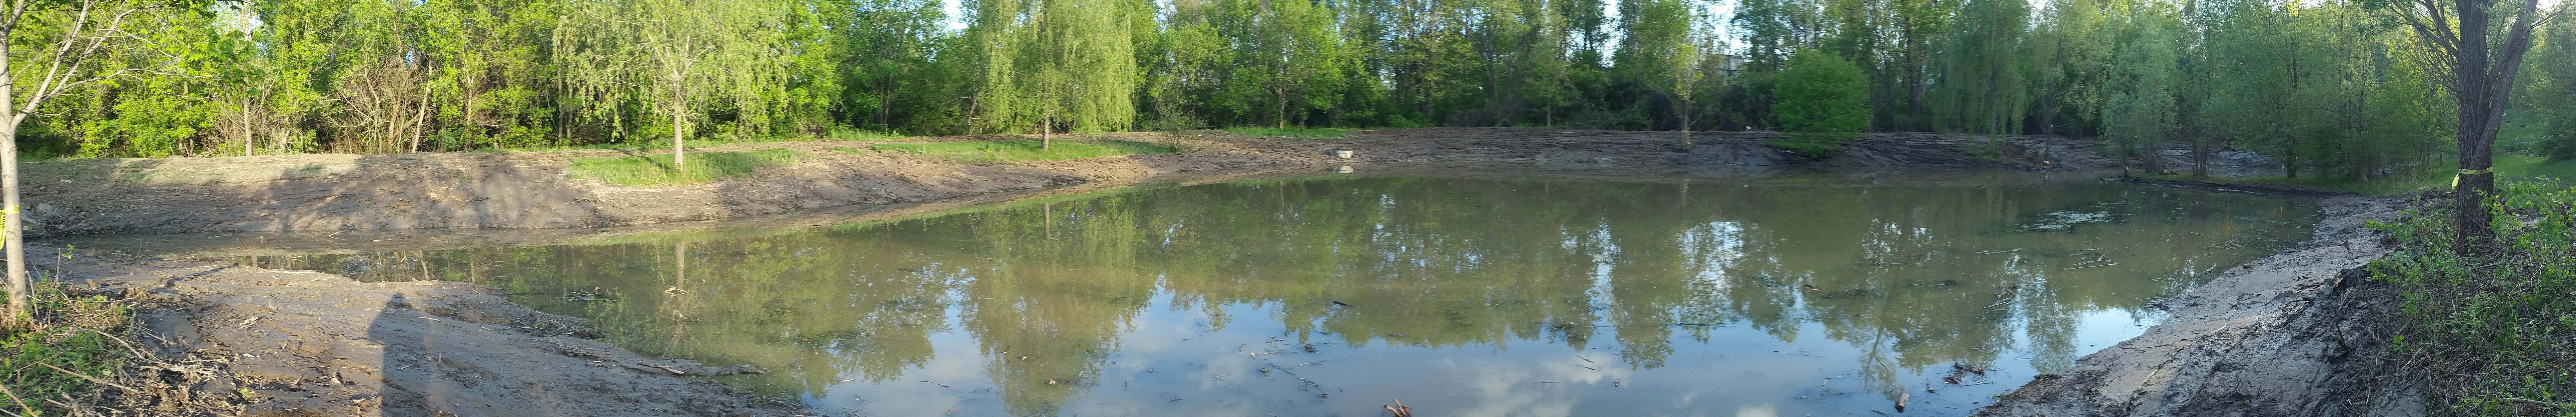 Ann Arbor, Michigan retention basin pond fix (32)-2.jpg